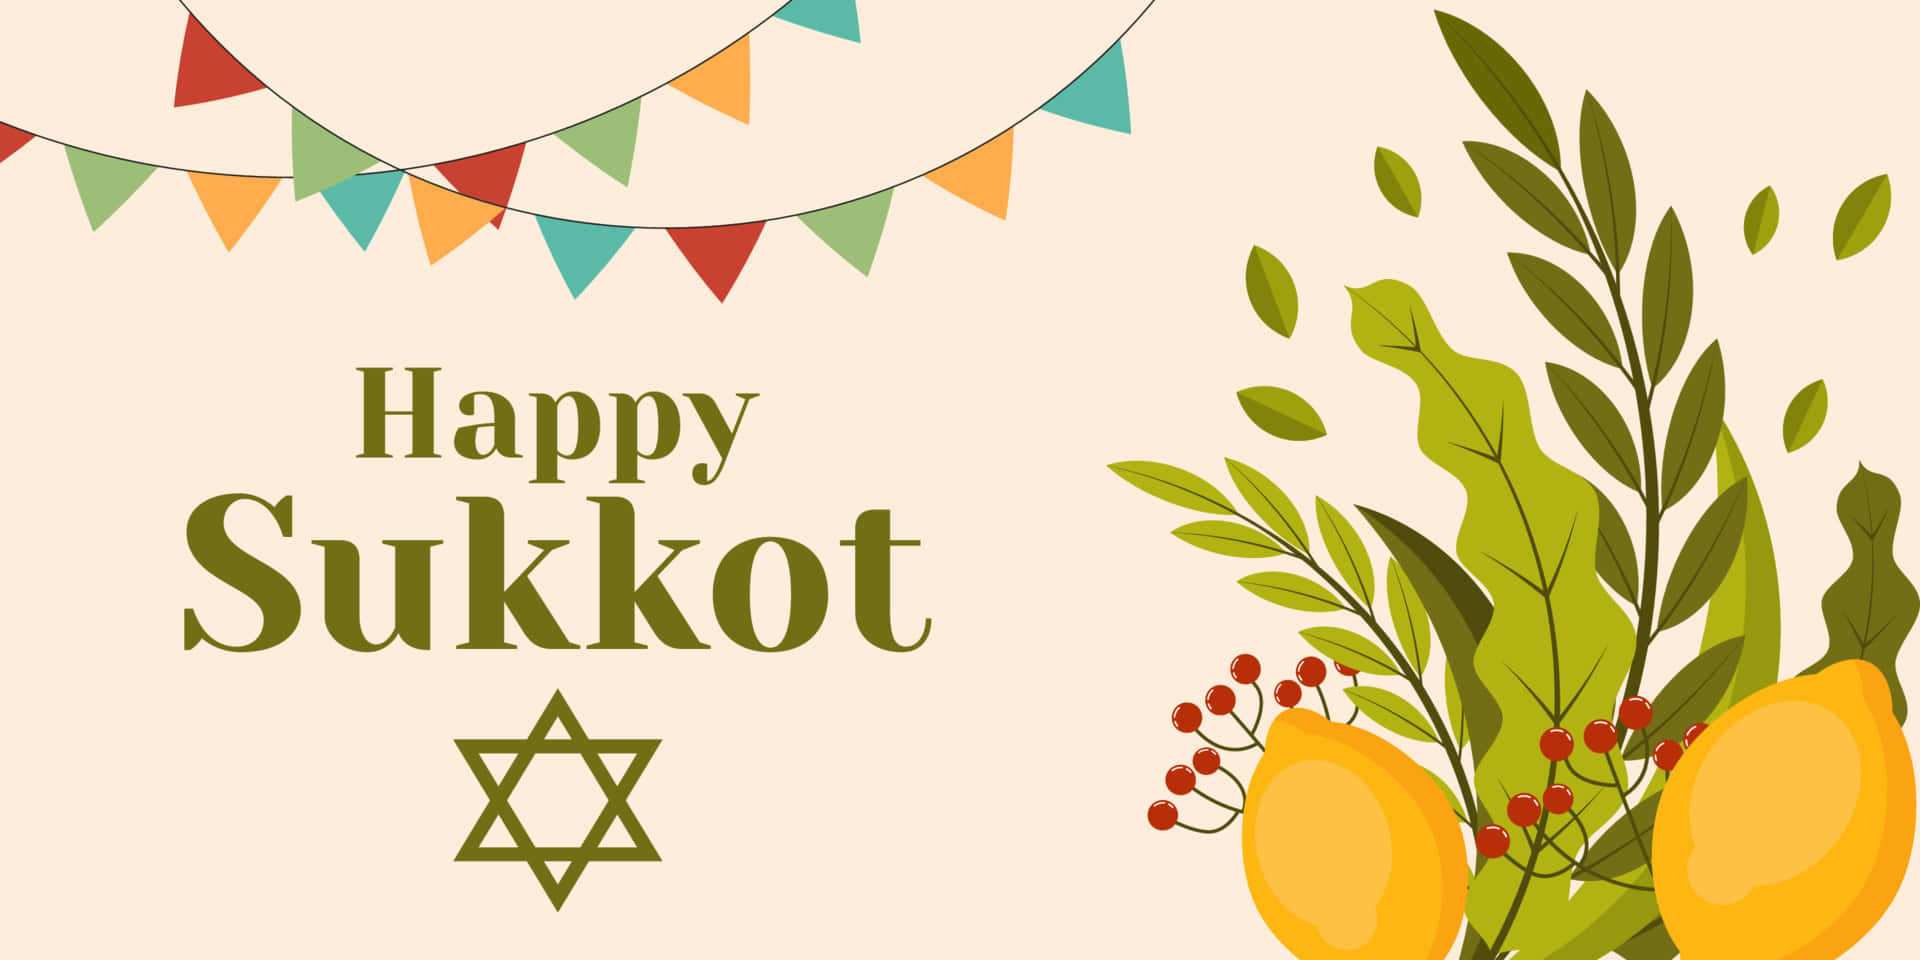 Celebrating A Joyous Sukkot Holiday Under A Traditional Sukkah Wallpaper